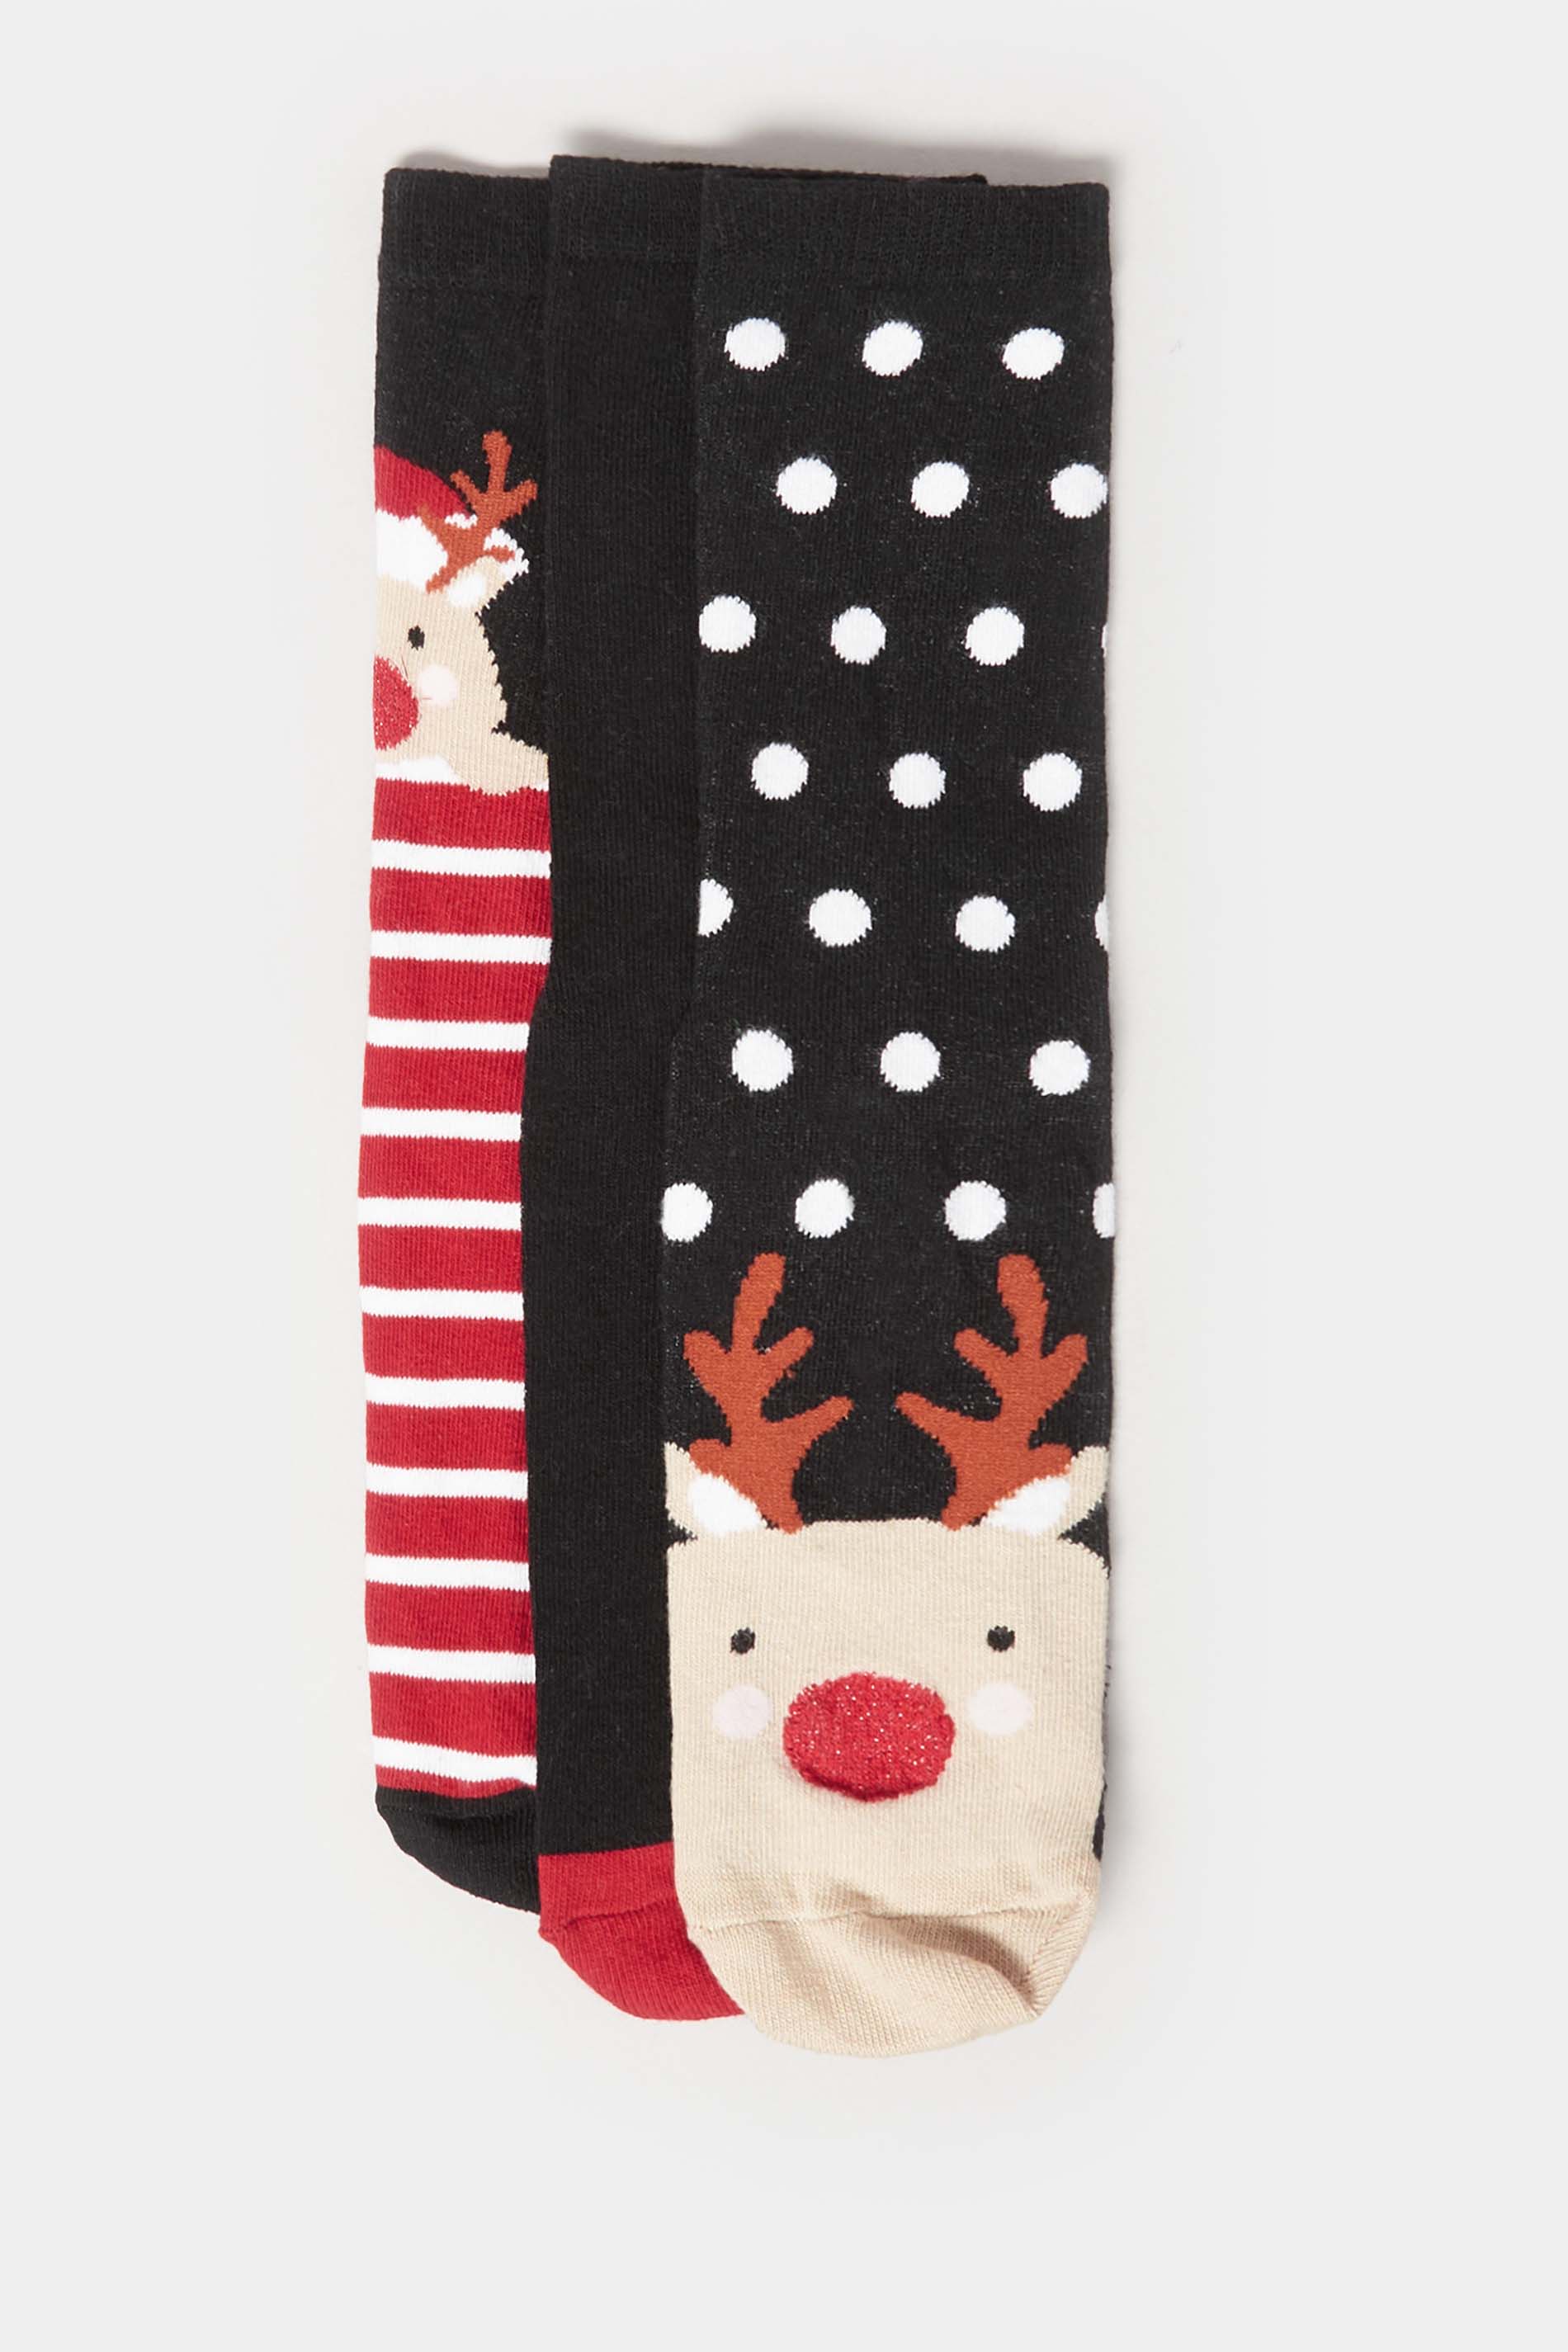 LTS 3 PACK Black Novelty Reindeer Ankle Socks | Long Tall Sally 3